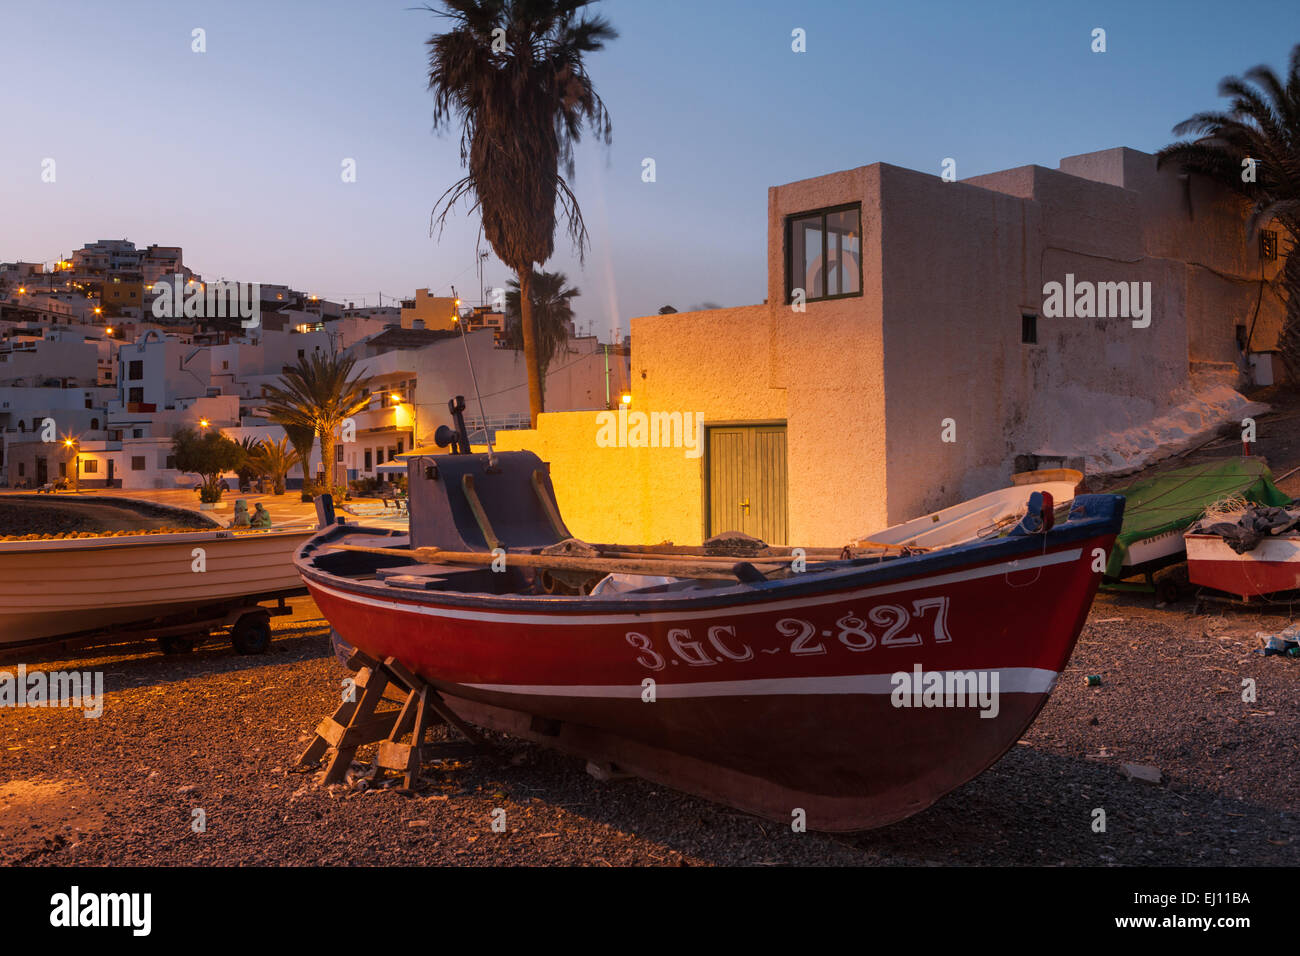 If read Playitas, Spain, Europe, Canary islands, Fuerteventura, fishing village, fishing boat, evening, mood, lighting, Stock Photo